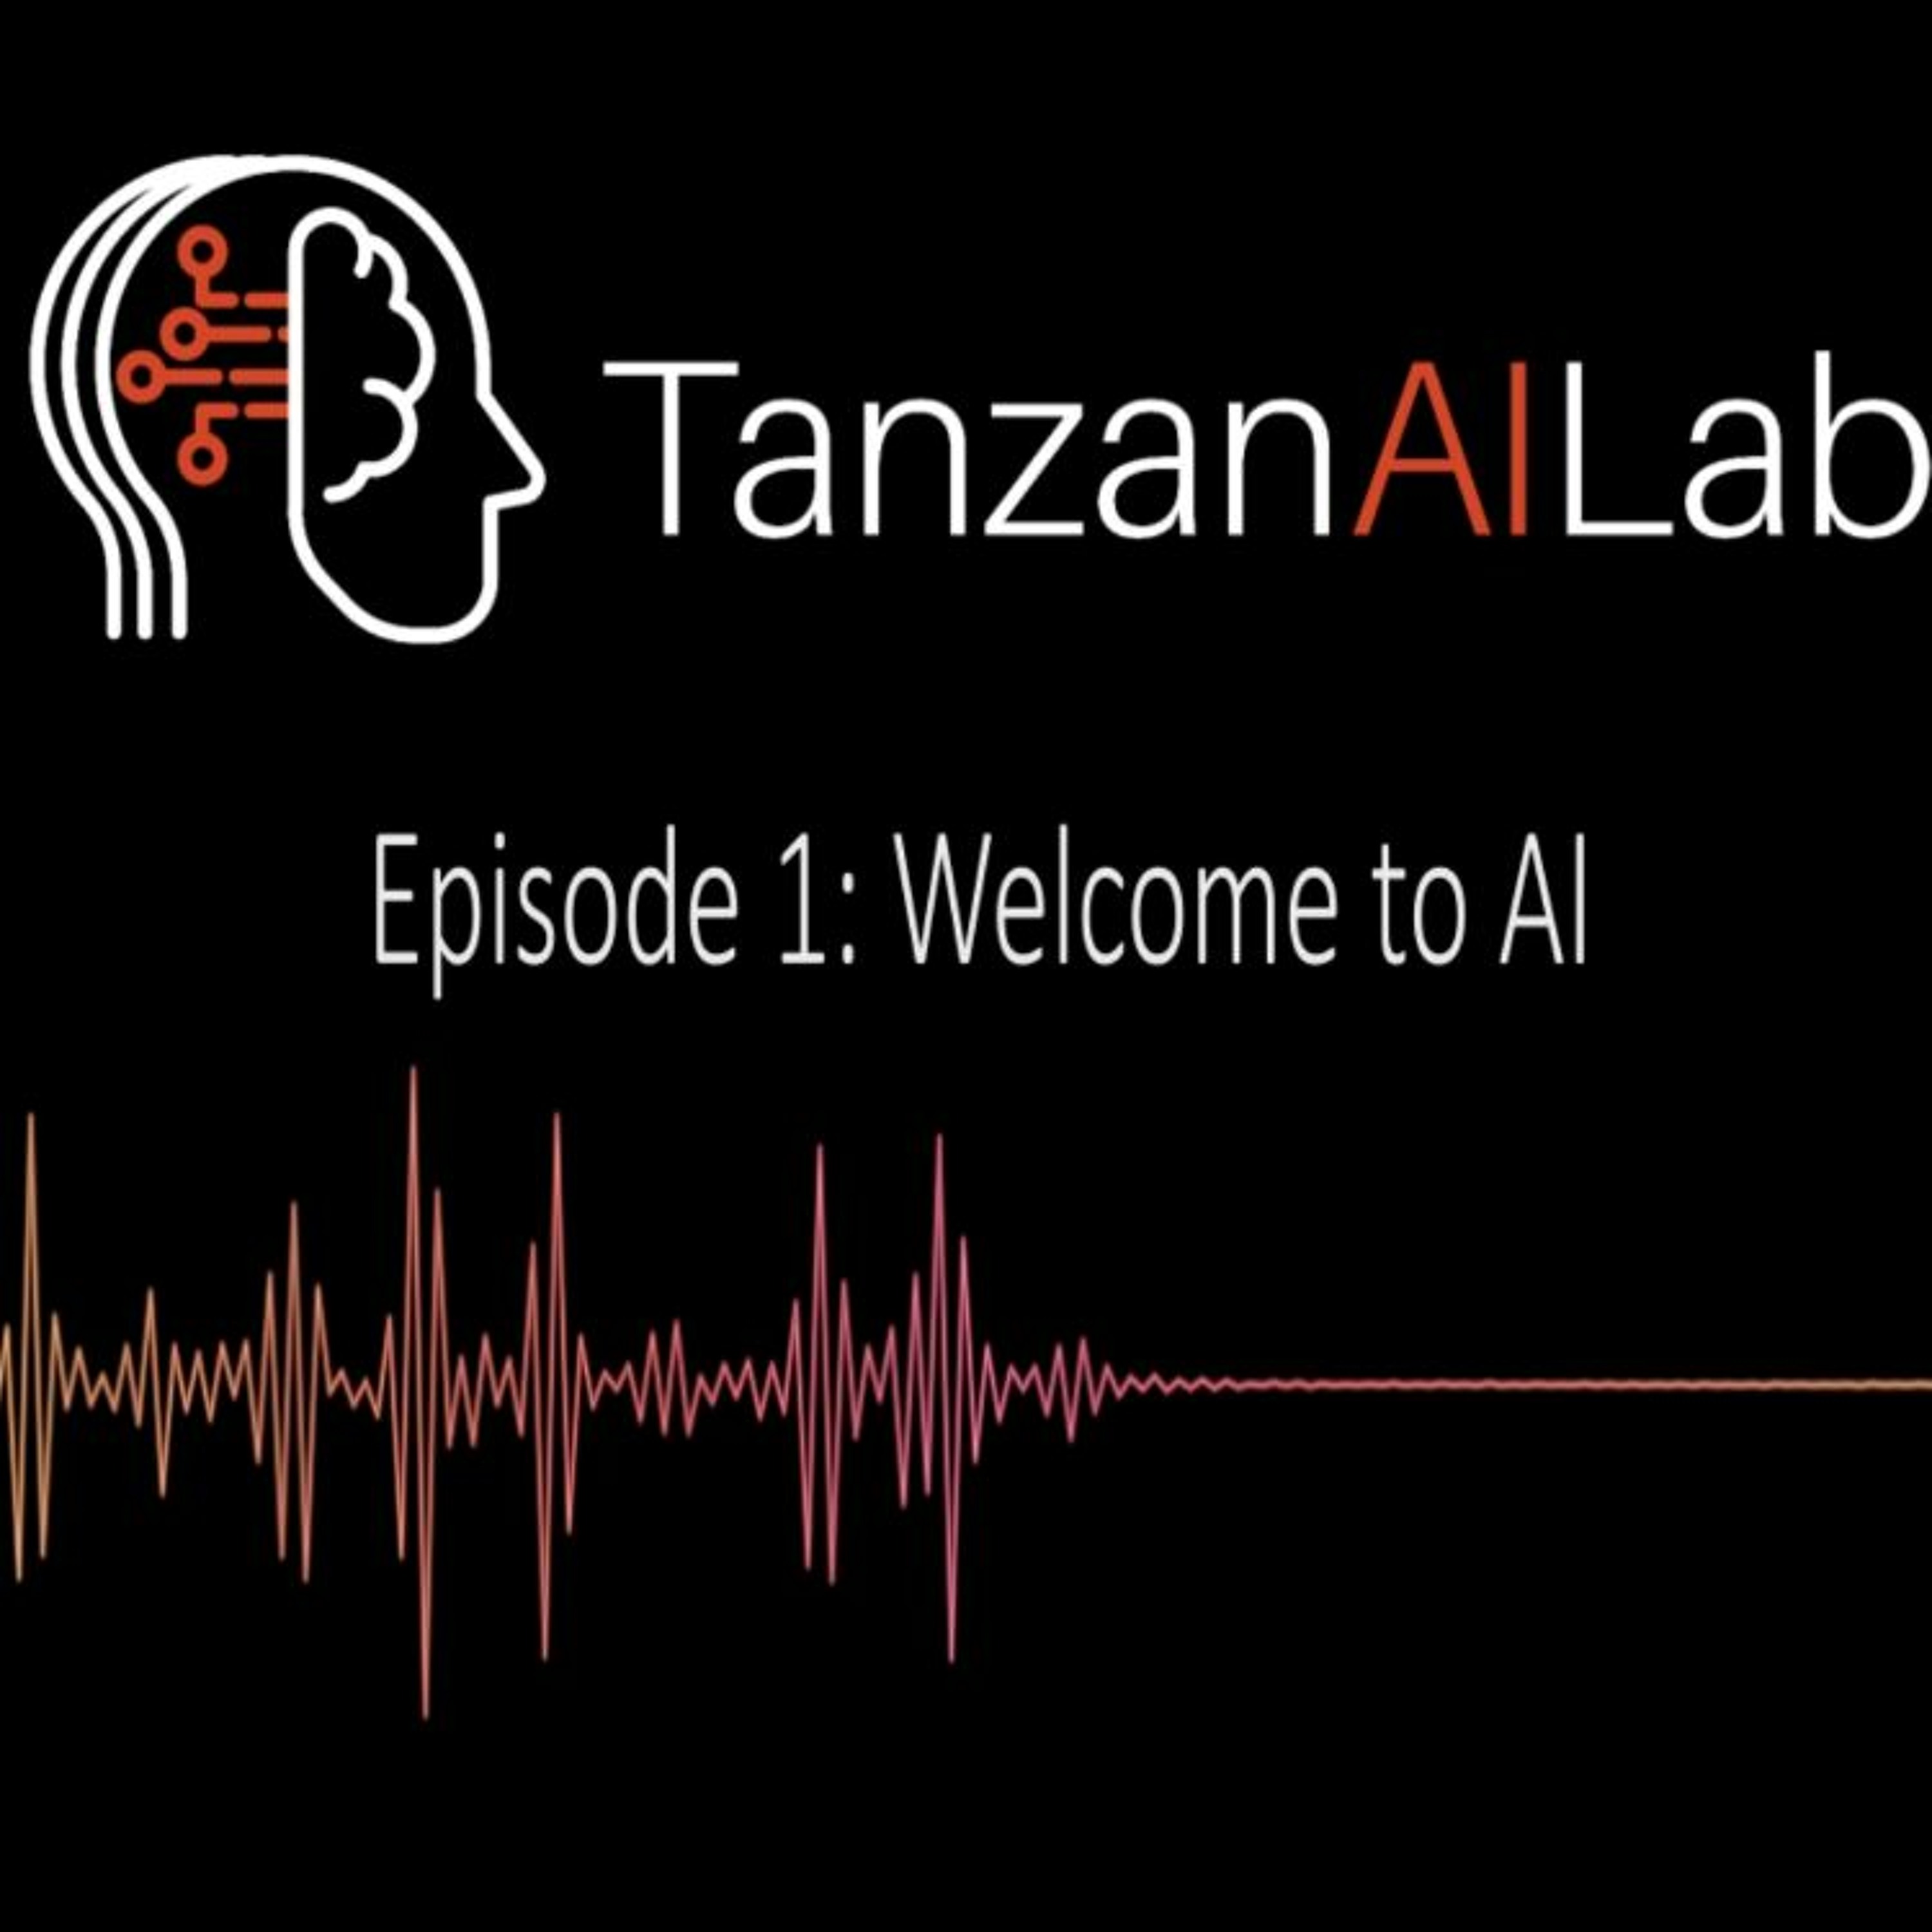 Tanzania AI Lab on Jamit